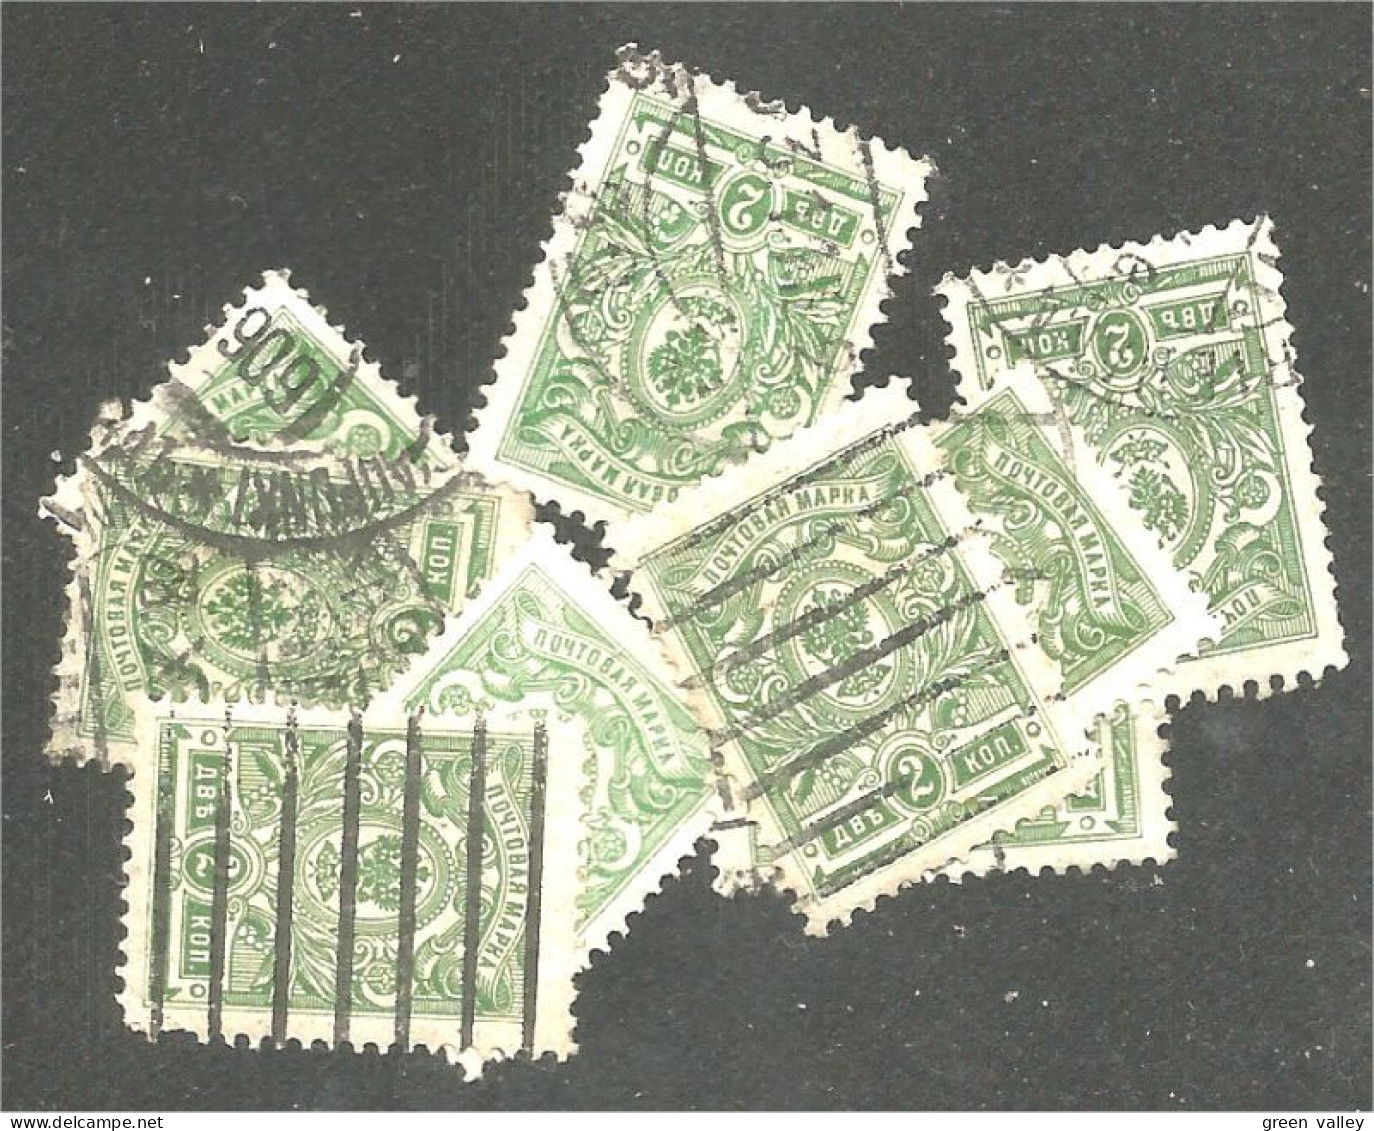 771 Russie 2k 1909 9 Stamps Green Vert Aigle Imperial Eagle Post Horn Cor Postal Varnish (RUZ-352) - Usados